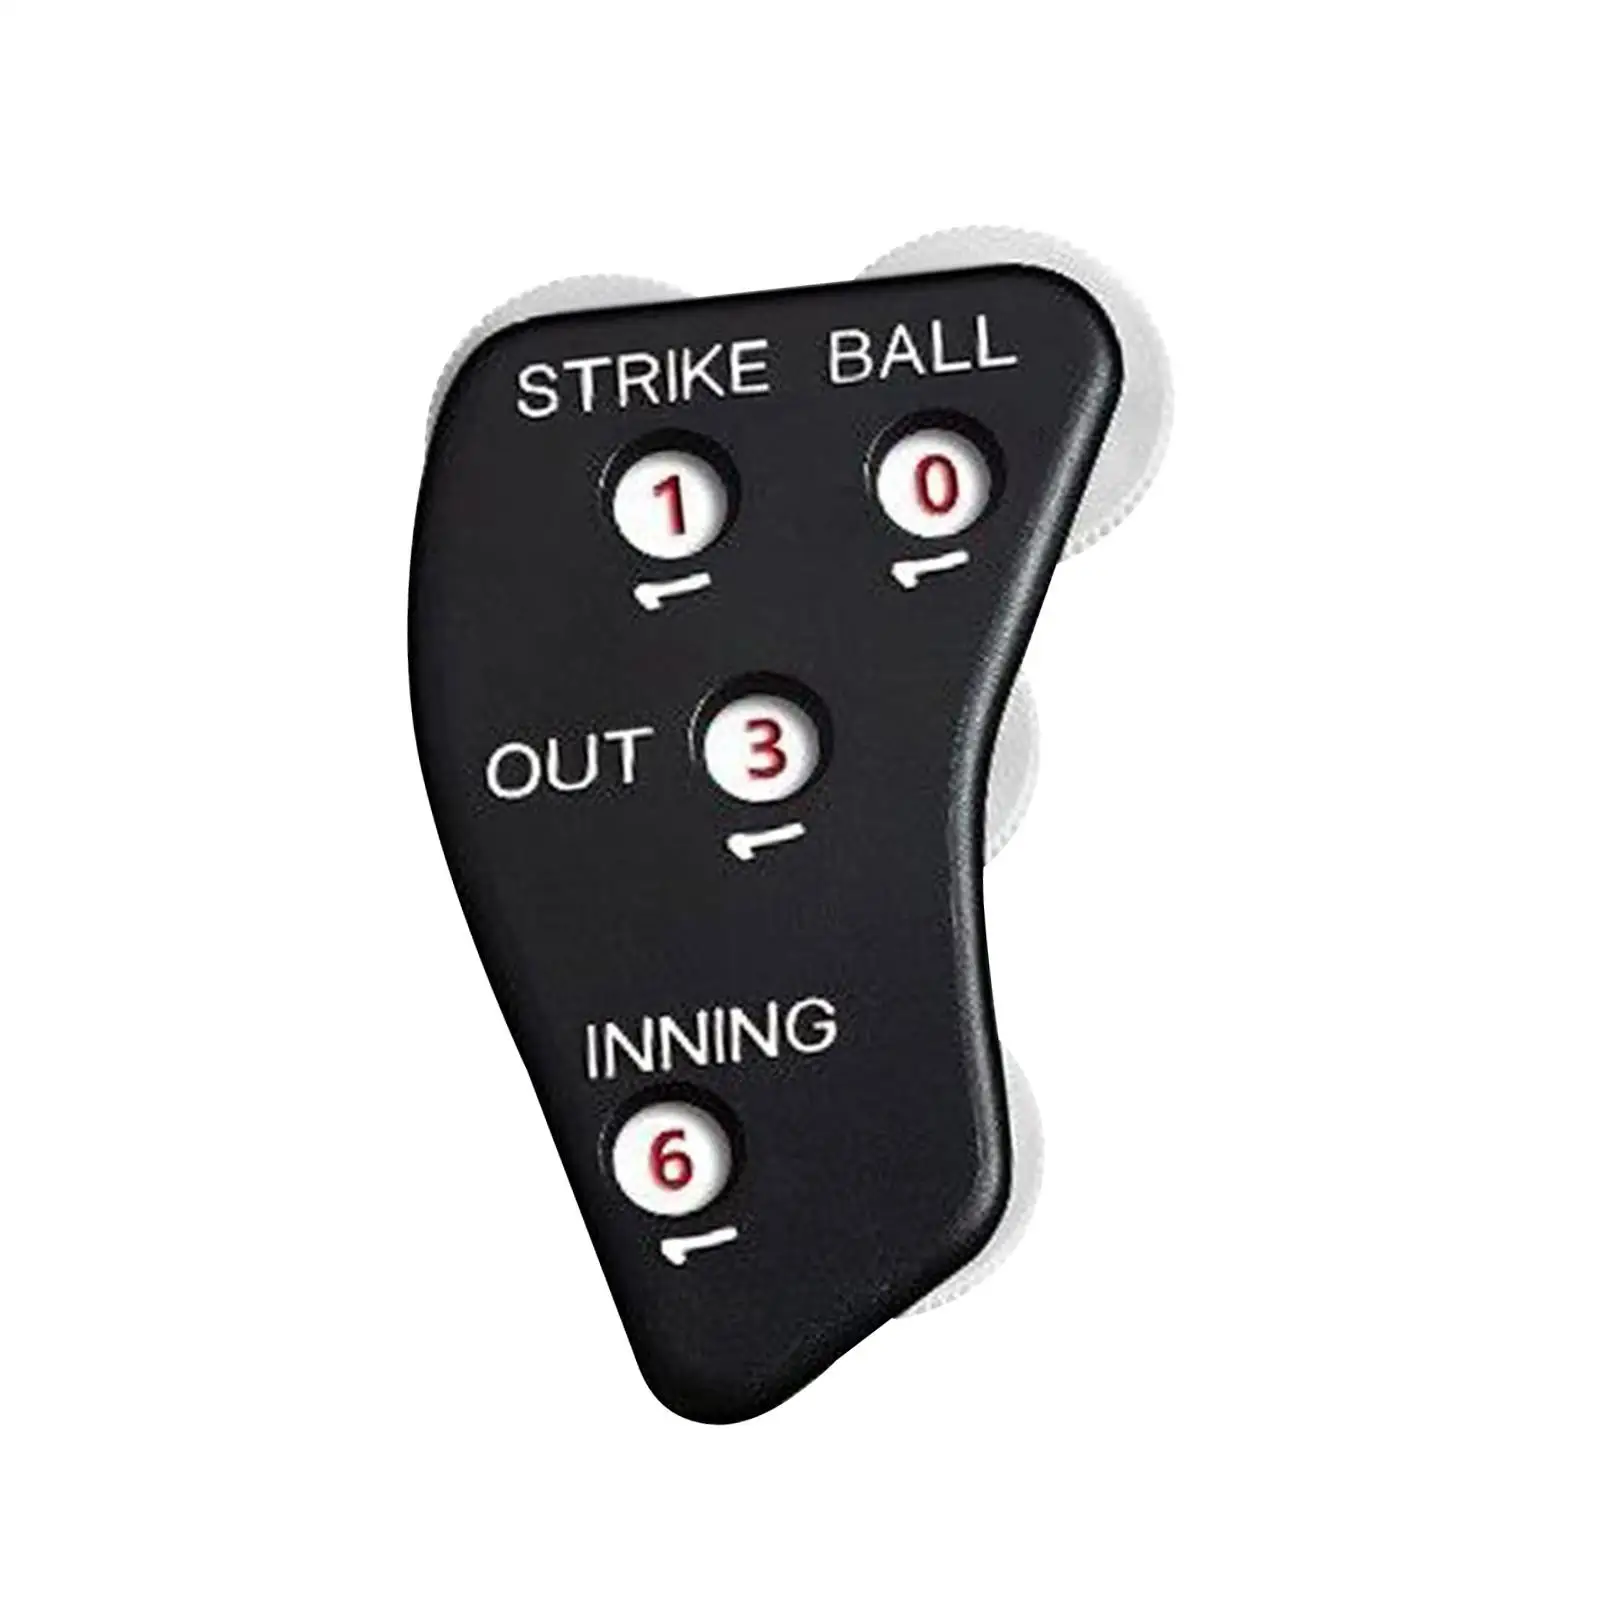 Baseball Umpire , Baseball Umpire Equipment 8cmx6cm Score Counter Black Softball Umpire Gear Indicator for Ball Strike Pocket